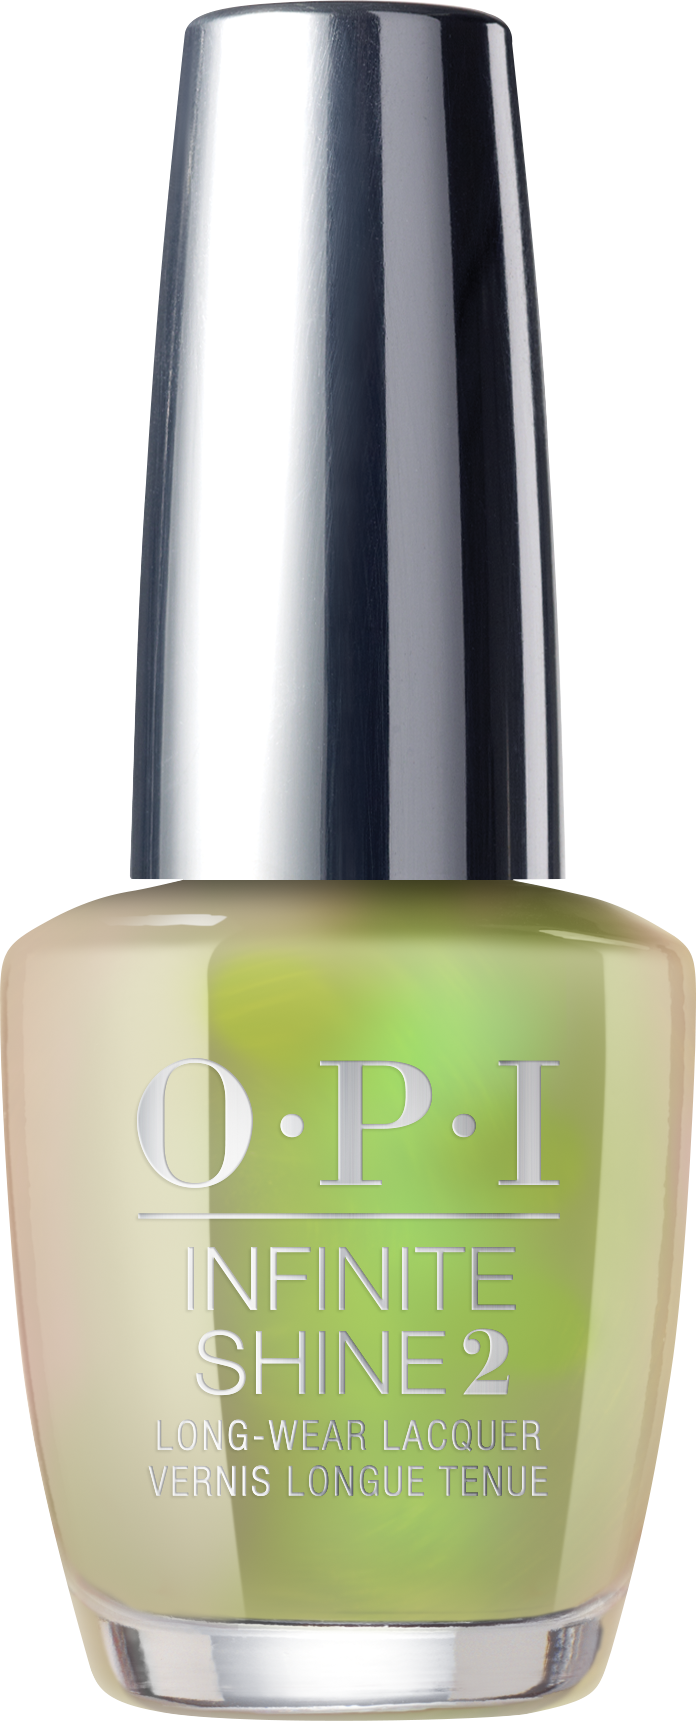 Стойкие покрытия для ногтей:  OPI -  Лак для ногтей Infinite Shine NEO-PEARL ISLE99 OLIVE FOR PEARLS!